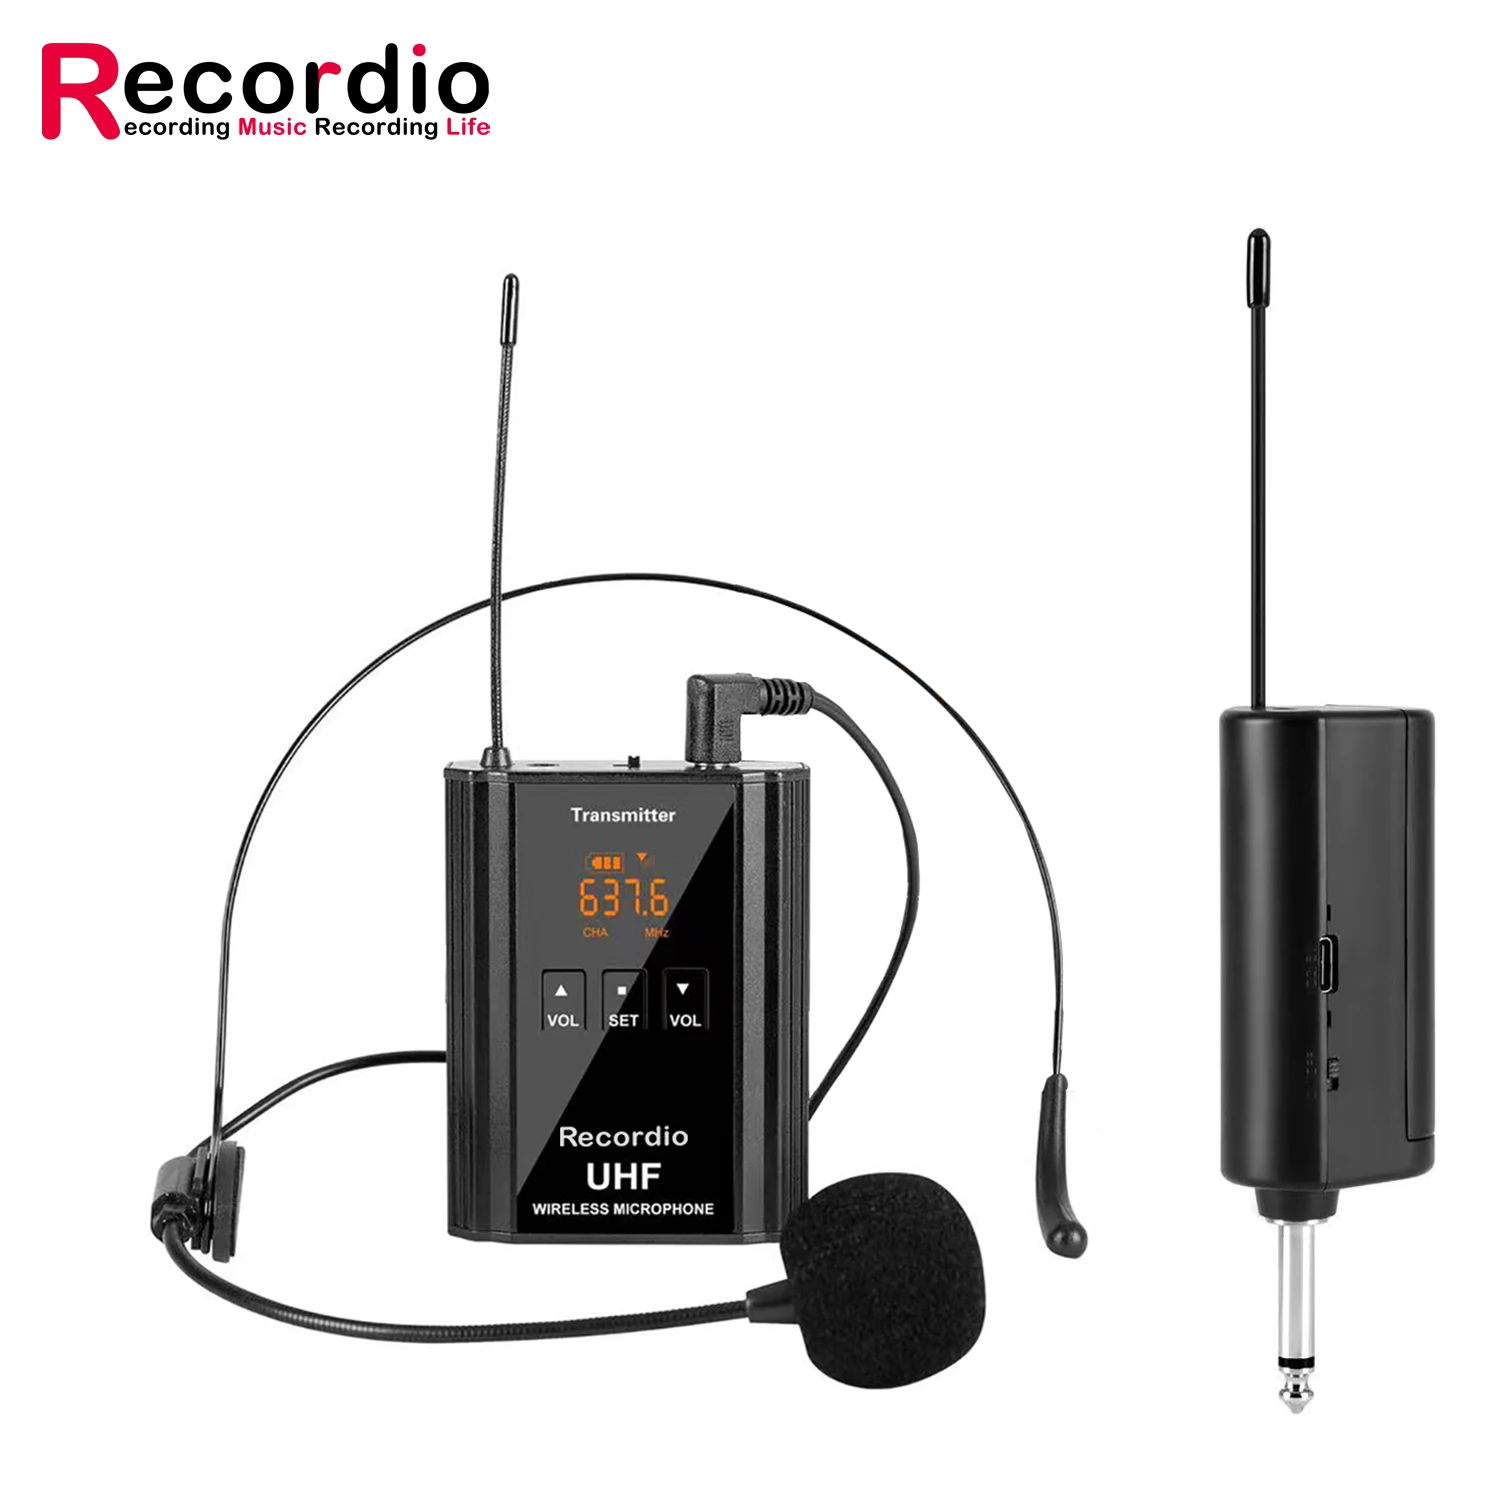 gaw-107a wireless lavalier microphone lapel mic